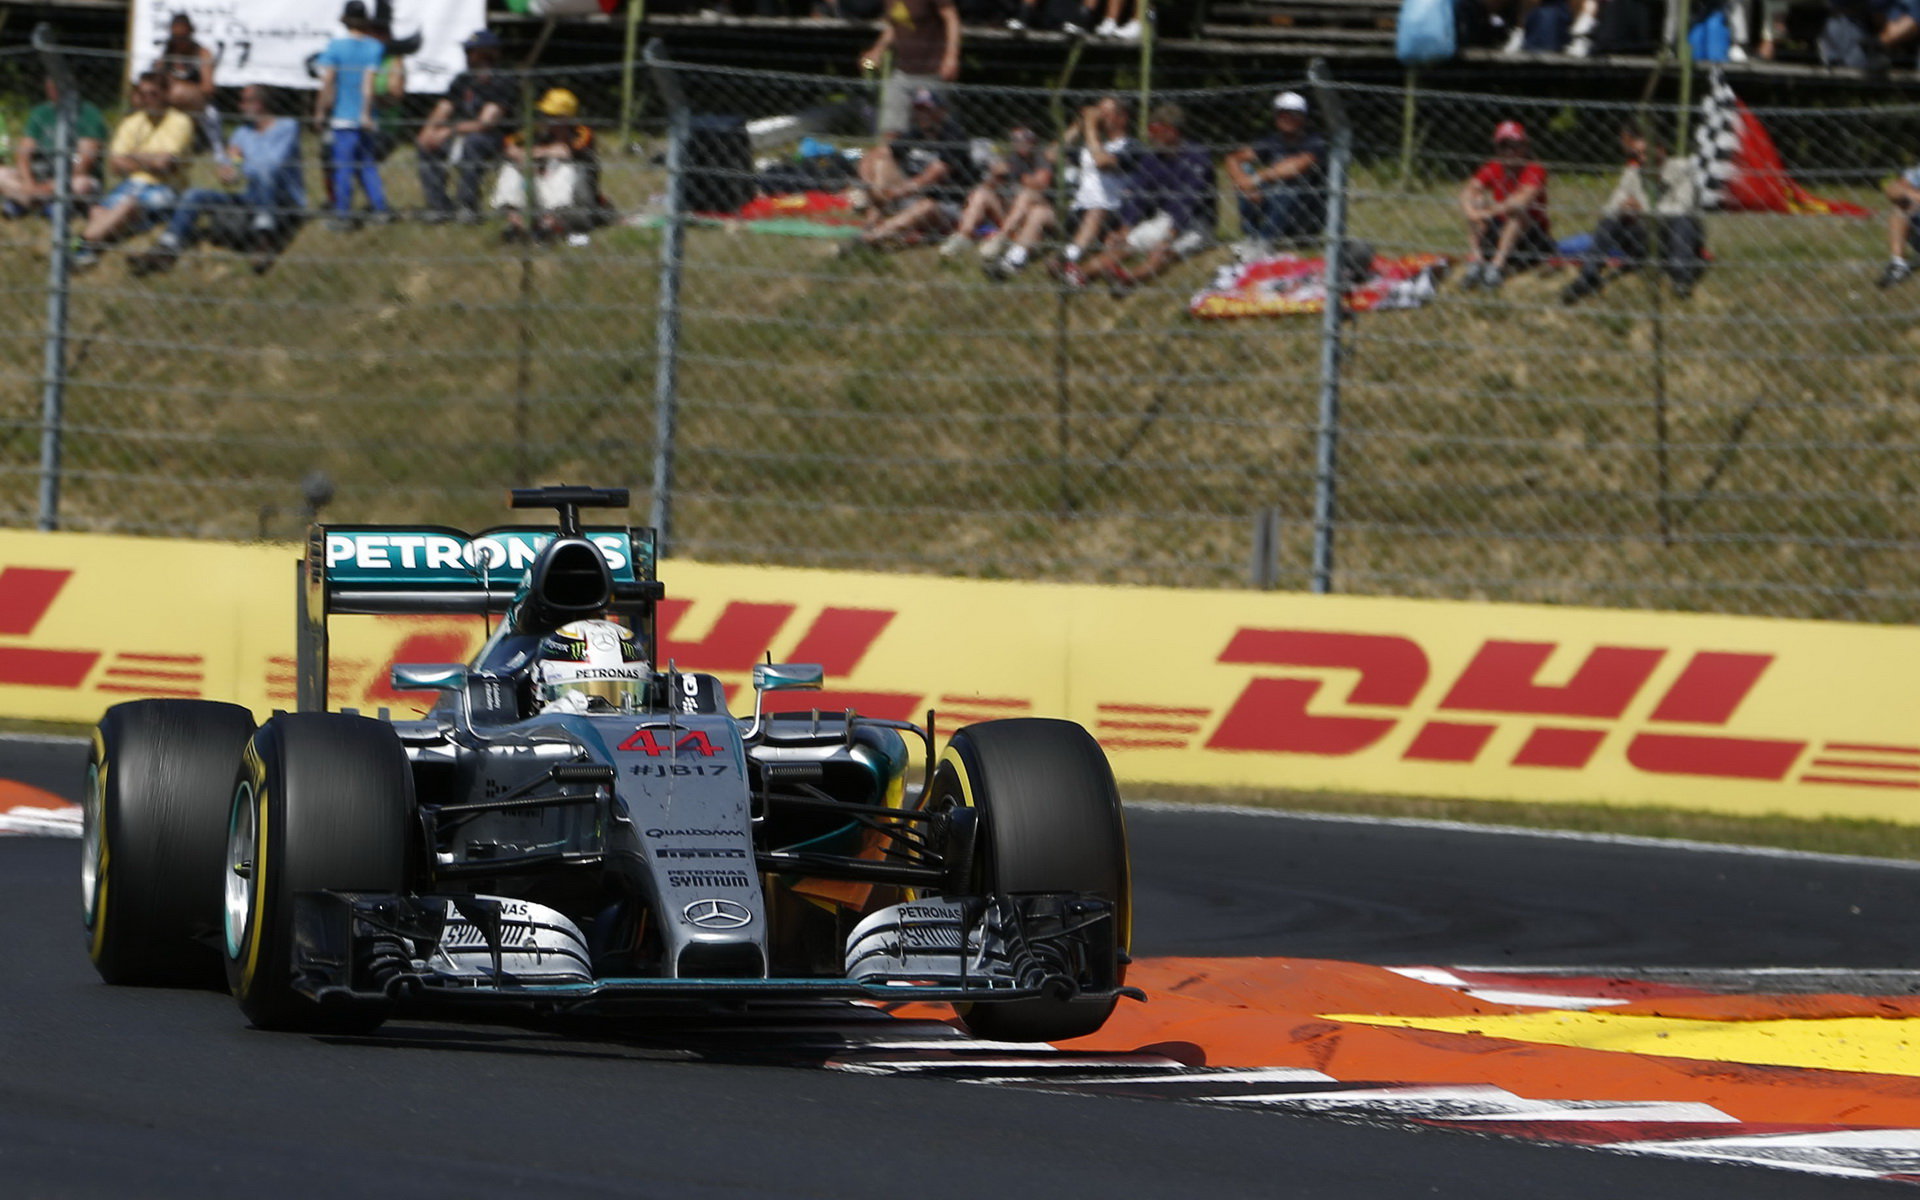 Loni zajel pole-position Lewis Hamilton - 1:22,020